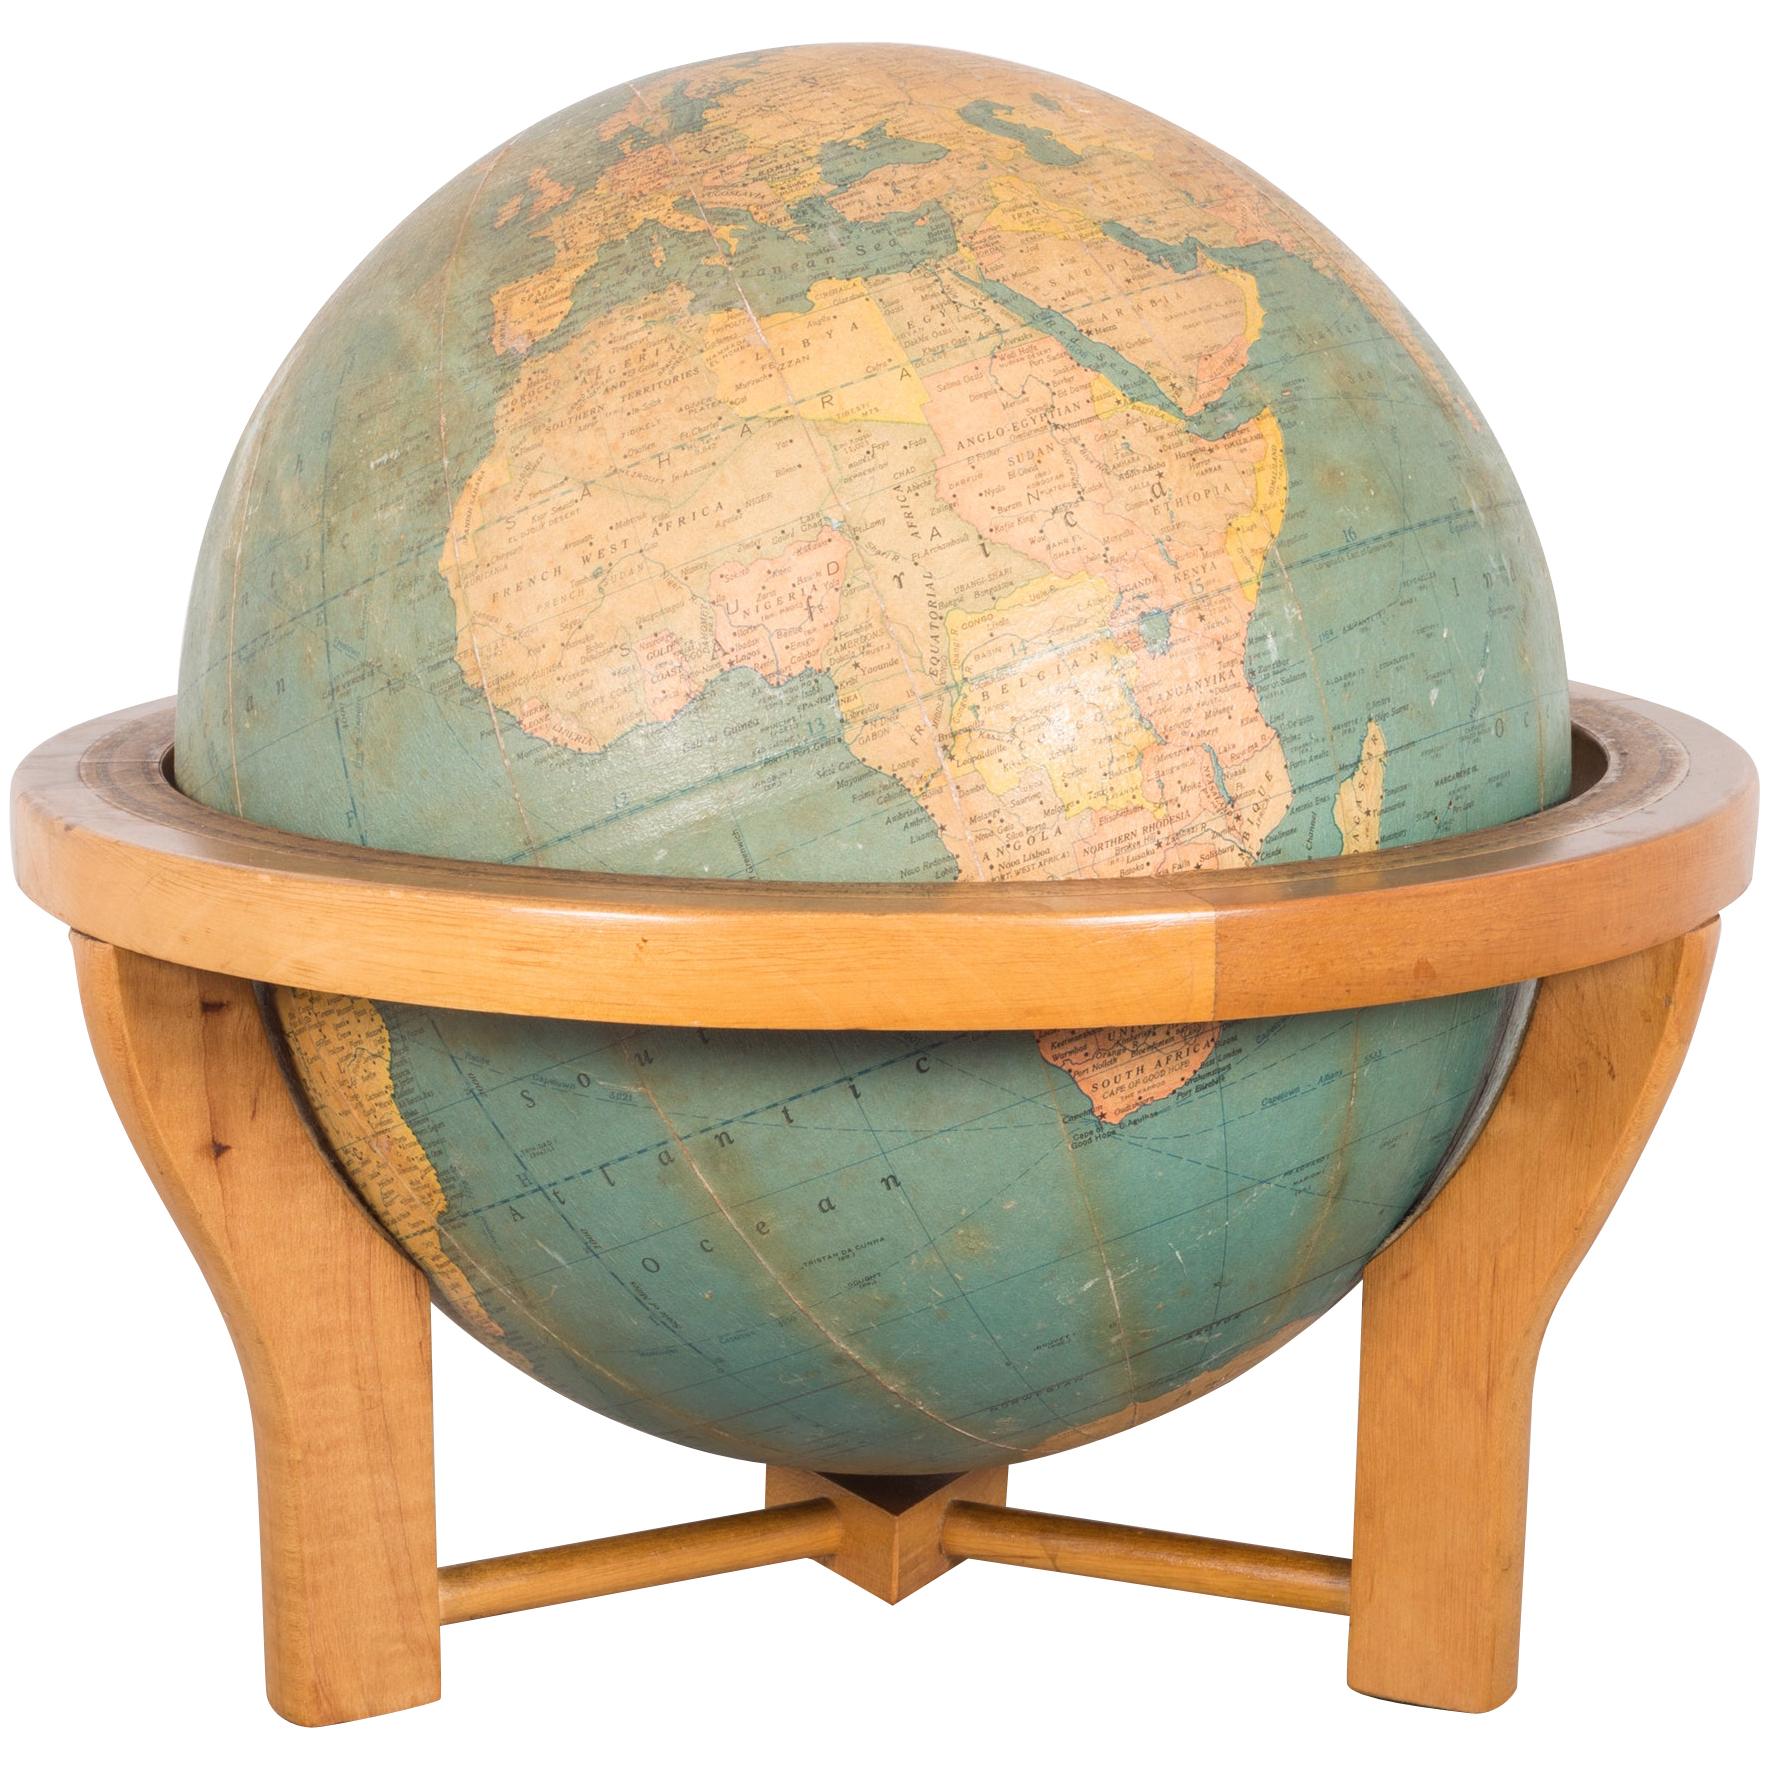 Rand McNally Terrestrial Globe, circa 1950-1958